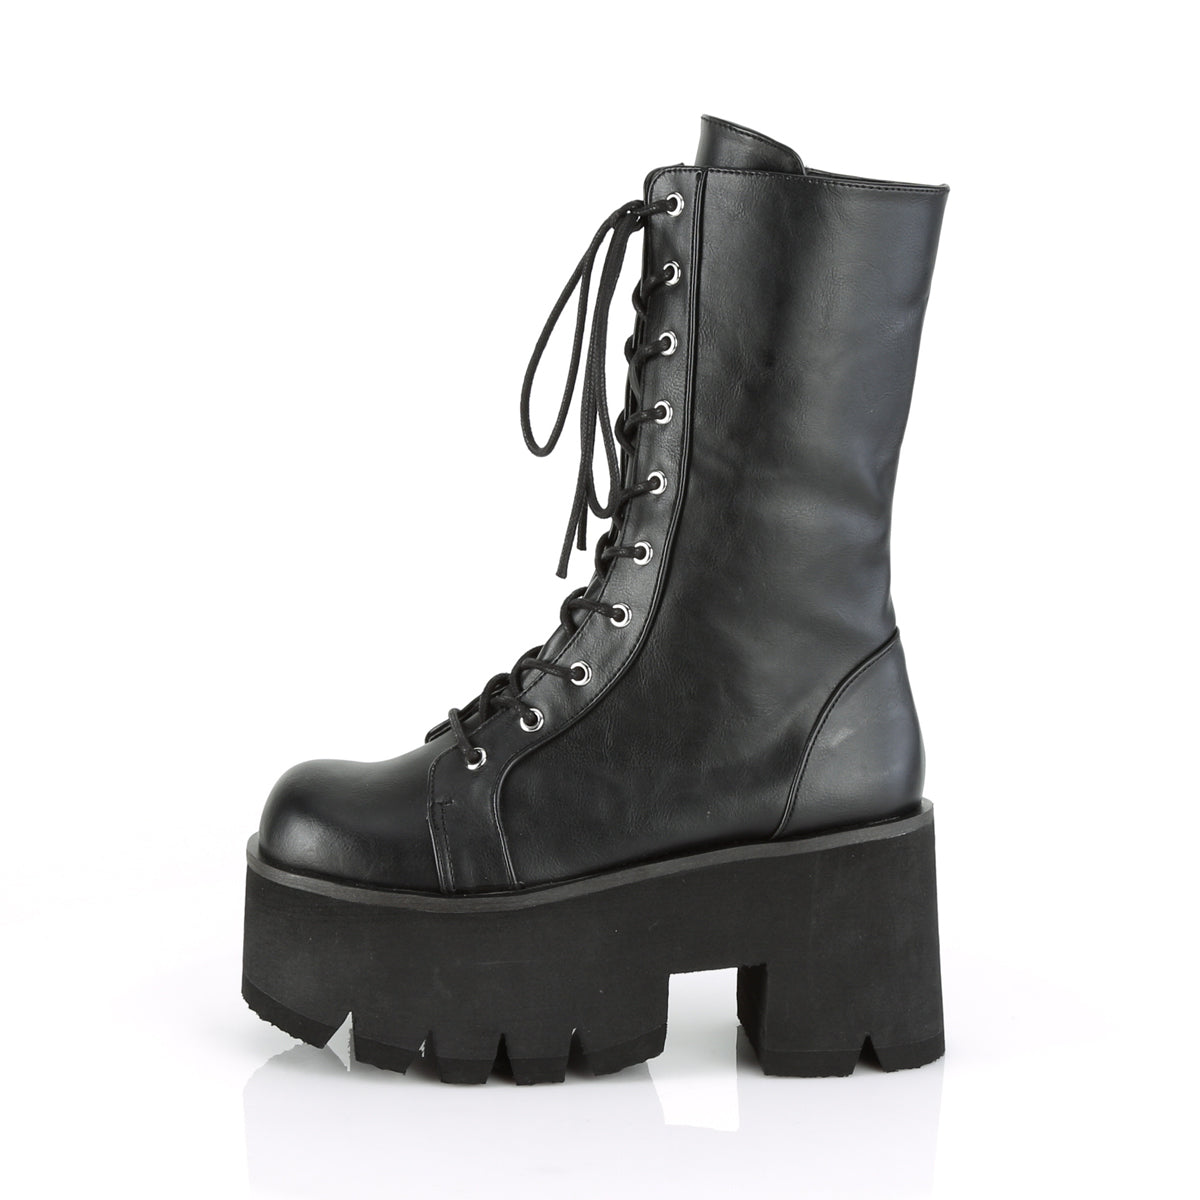 ASHES-105 Demonia Black Vegan Leather Women's Mid-Calf & Knee High Boots [Demonia Cult Alternative Footwear]